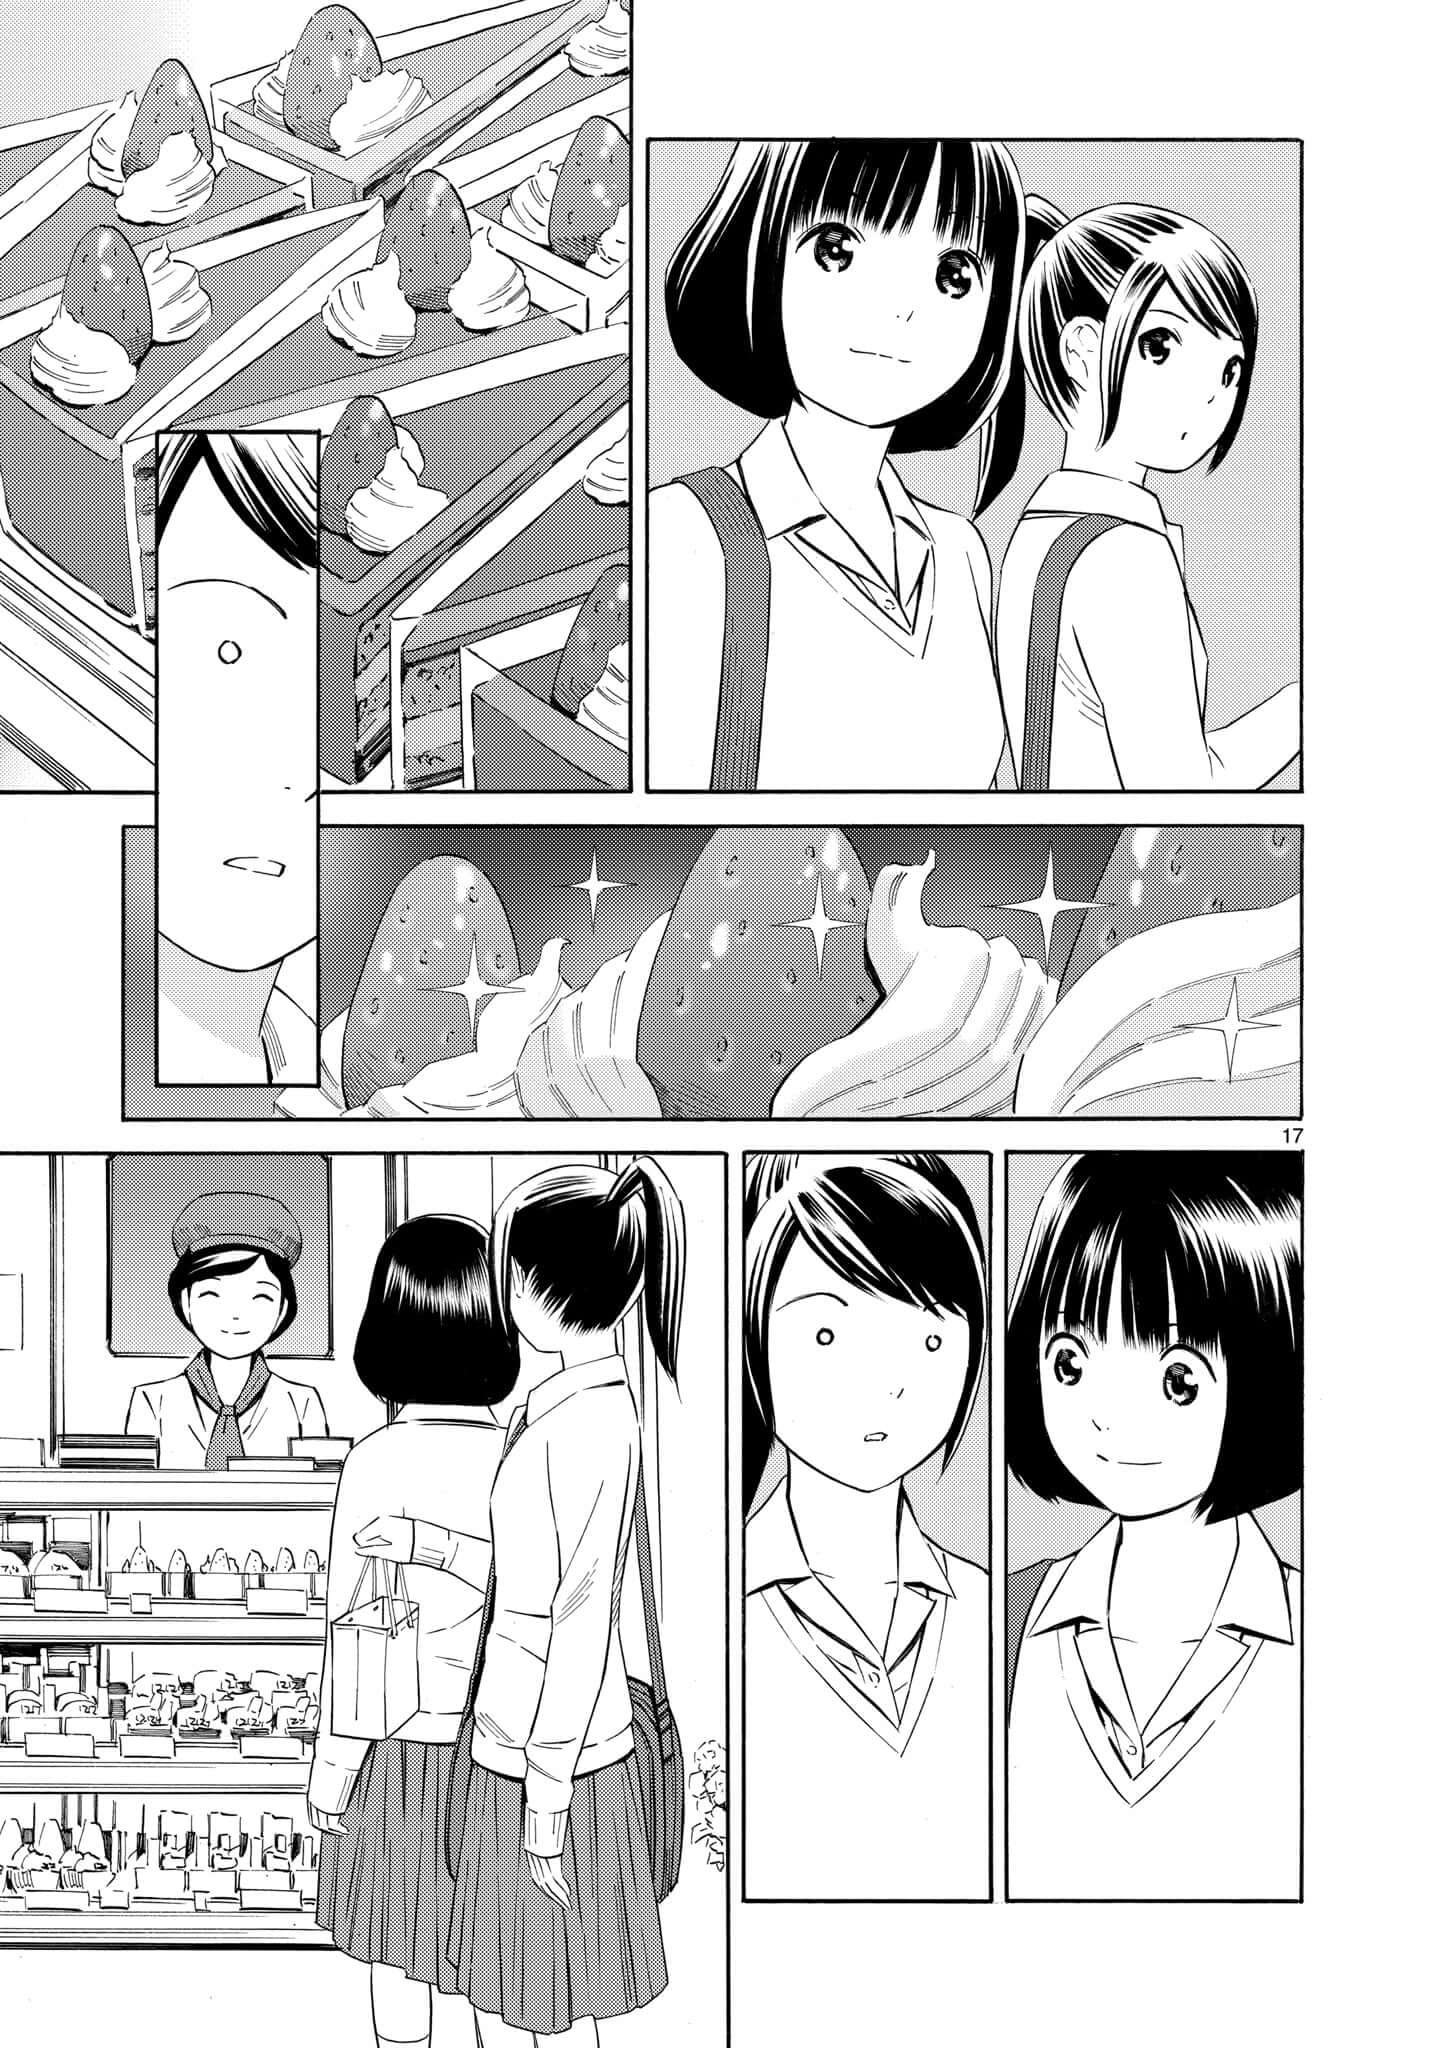 Kyou Kara Mirai - 2 page 17